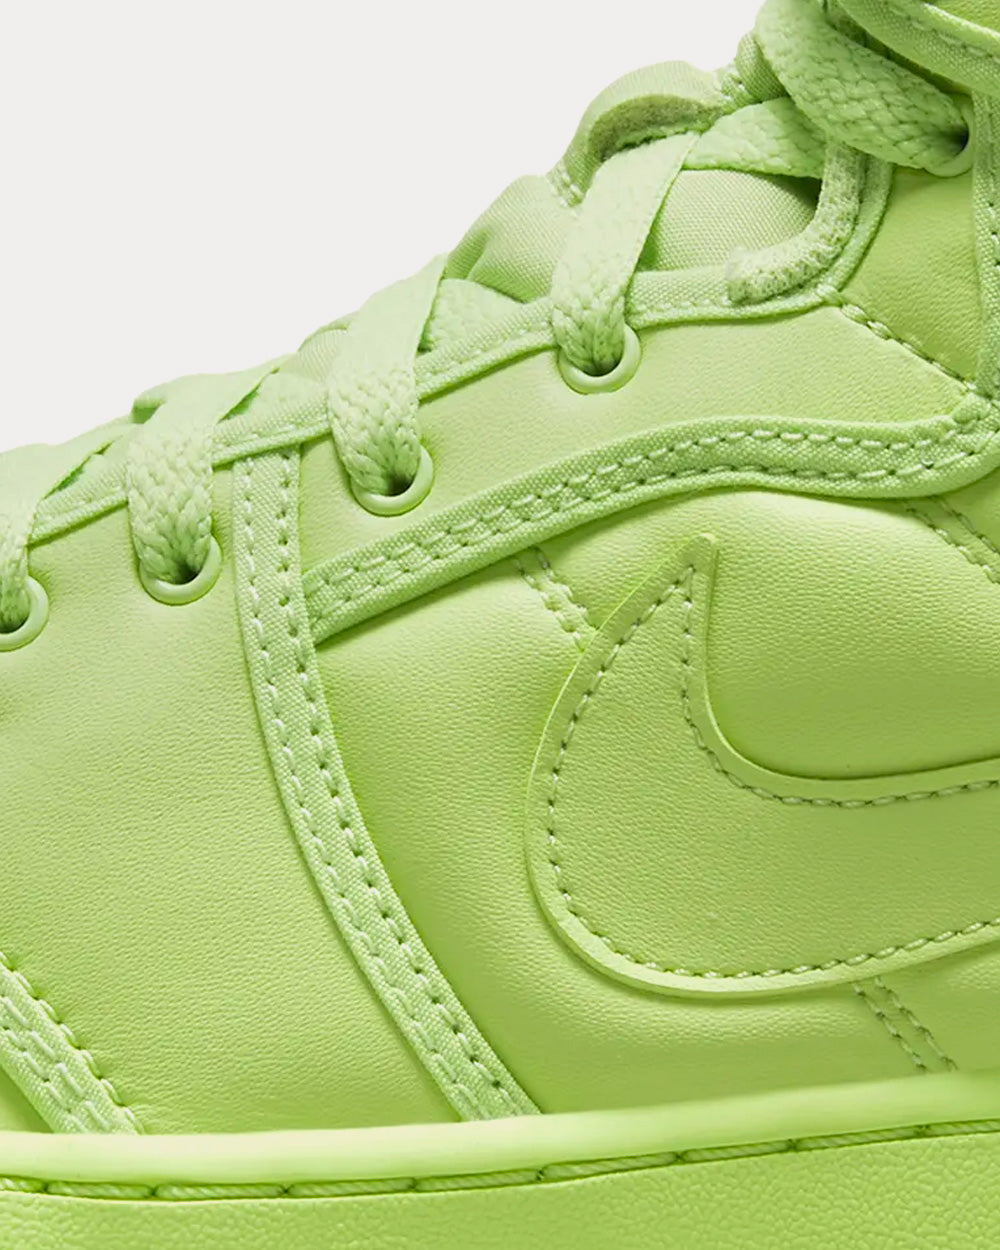 Nike x Billie Eilish - AJKO 1 Ghost Green High Top Sneakers